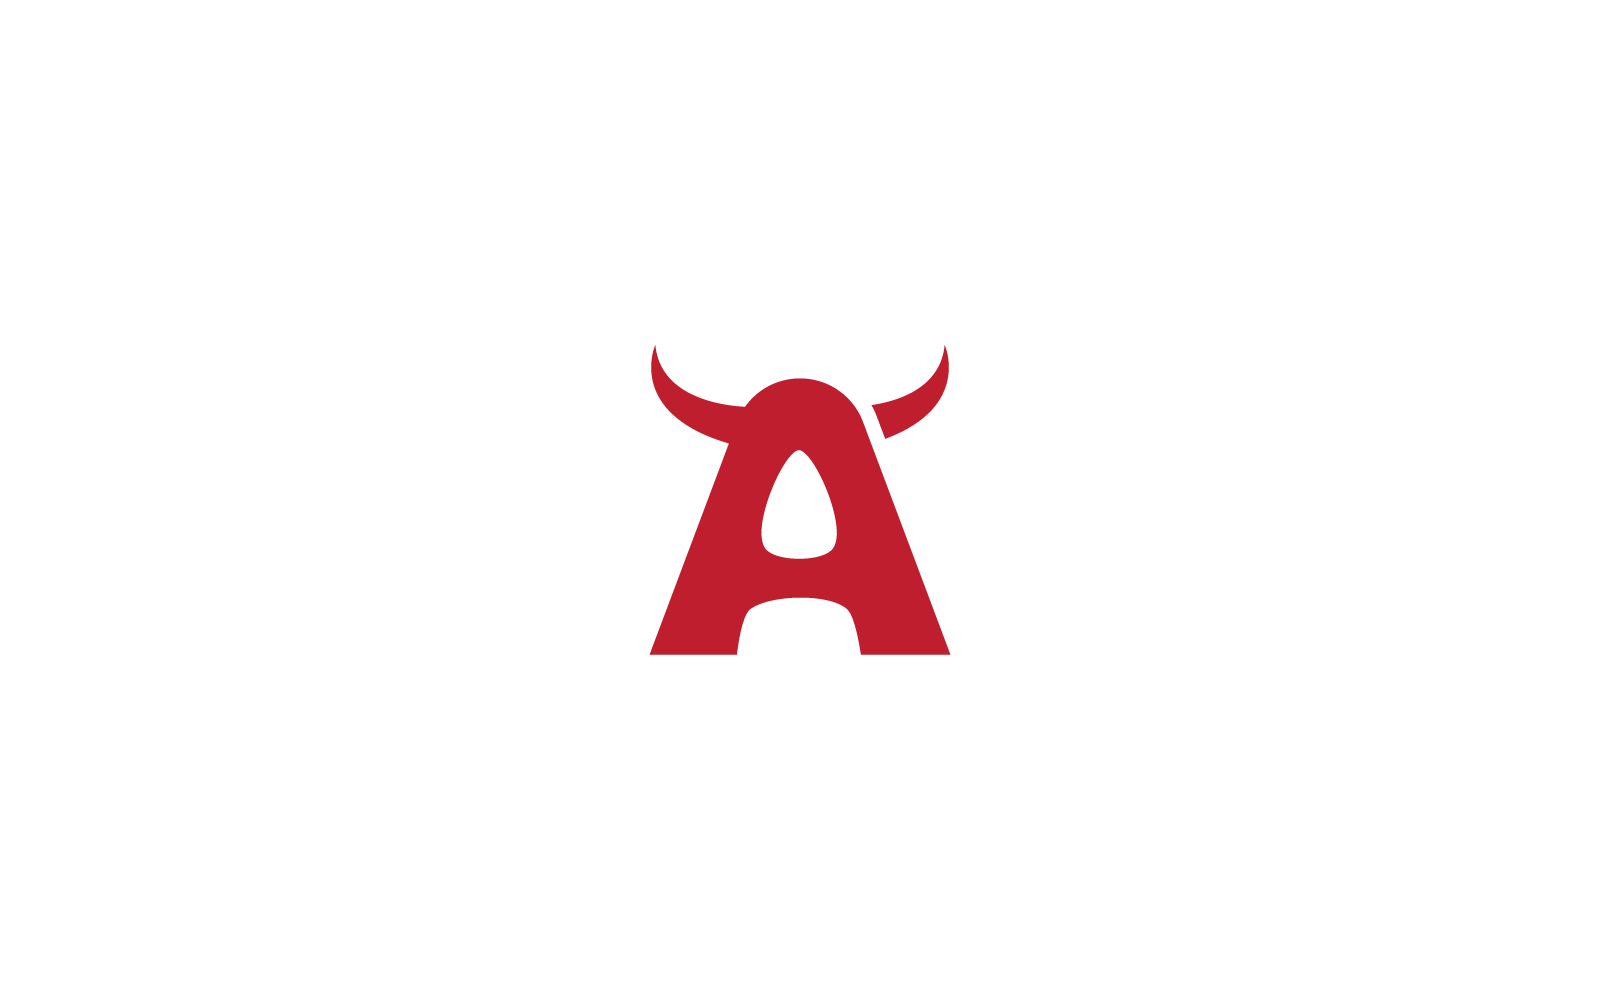 A initial letter with devil horn logo vector design